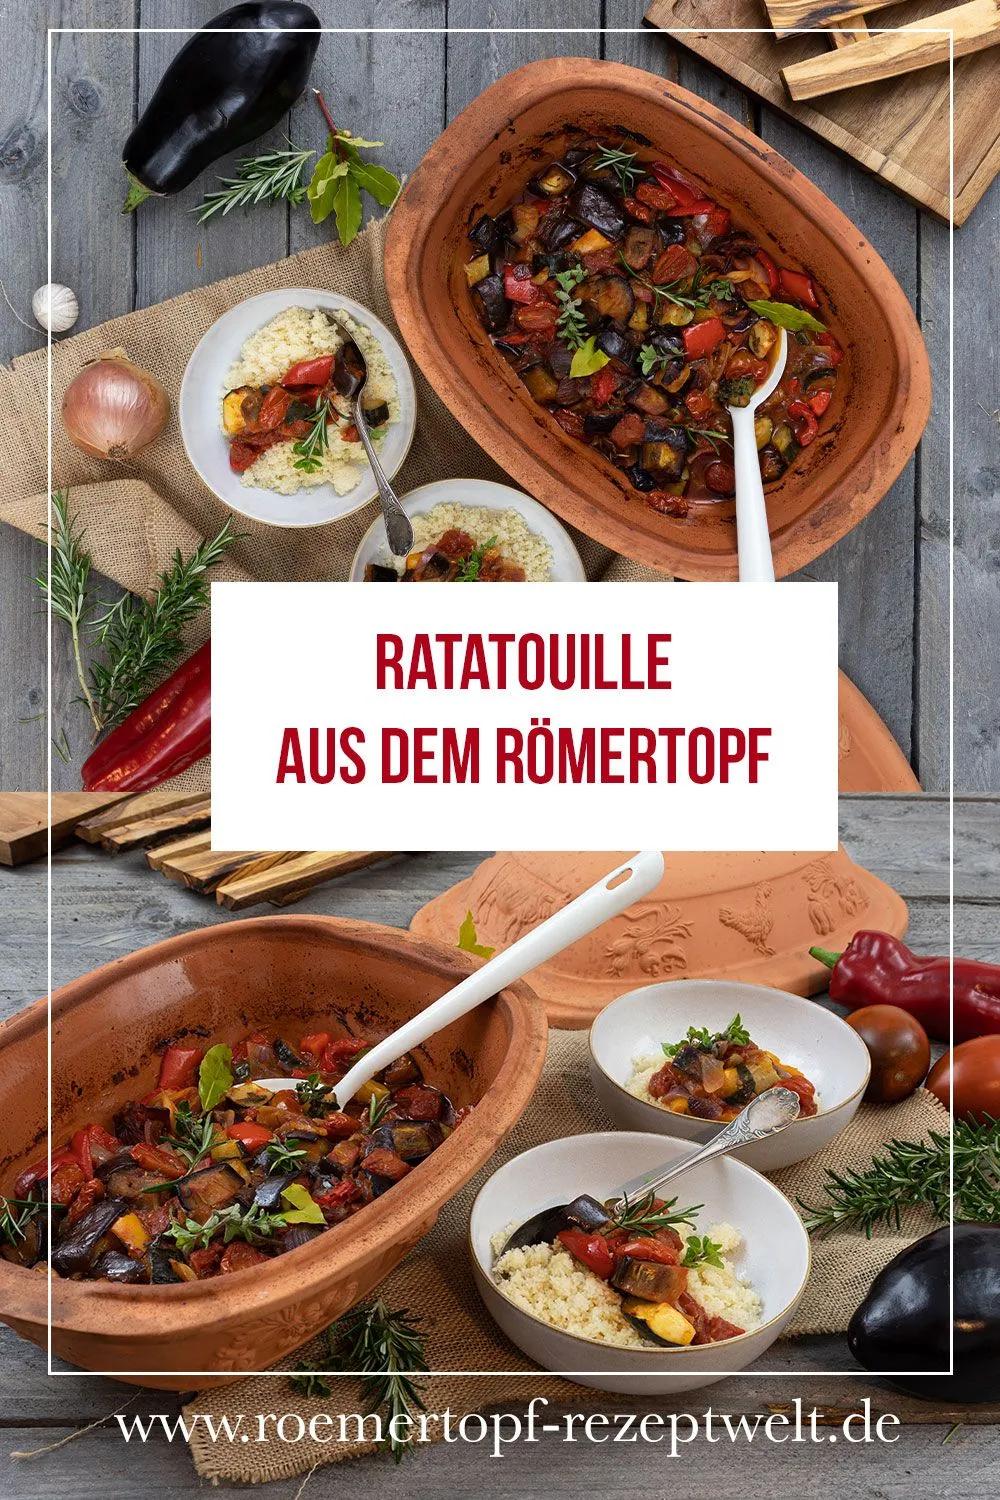 Ratatouille - Römertopf Rezeptwelt | Rezept | Kochen im römertopf ...